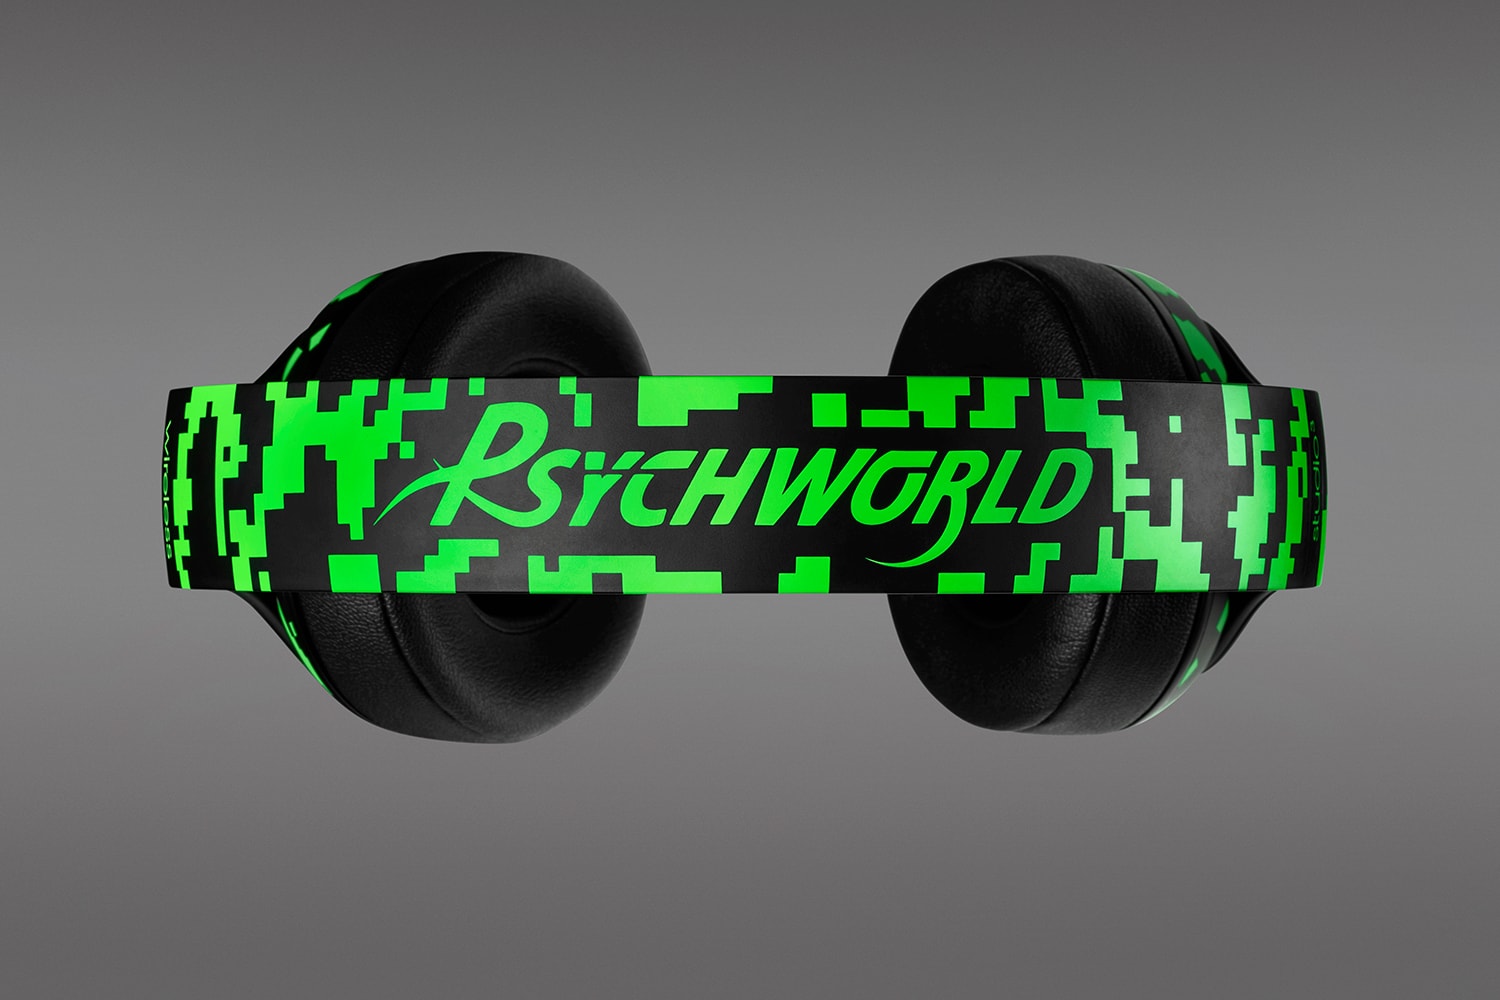 Psychworld Beats aStudio3 Wireless Headphones Merch Release Info Buy Price Date Cactus Jack Record Don Toliver